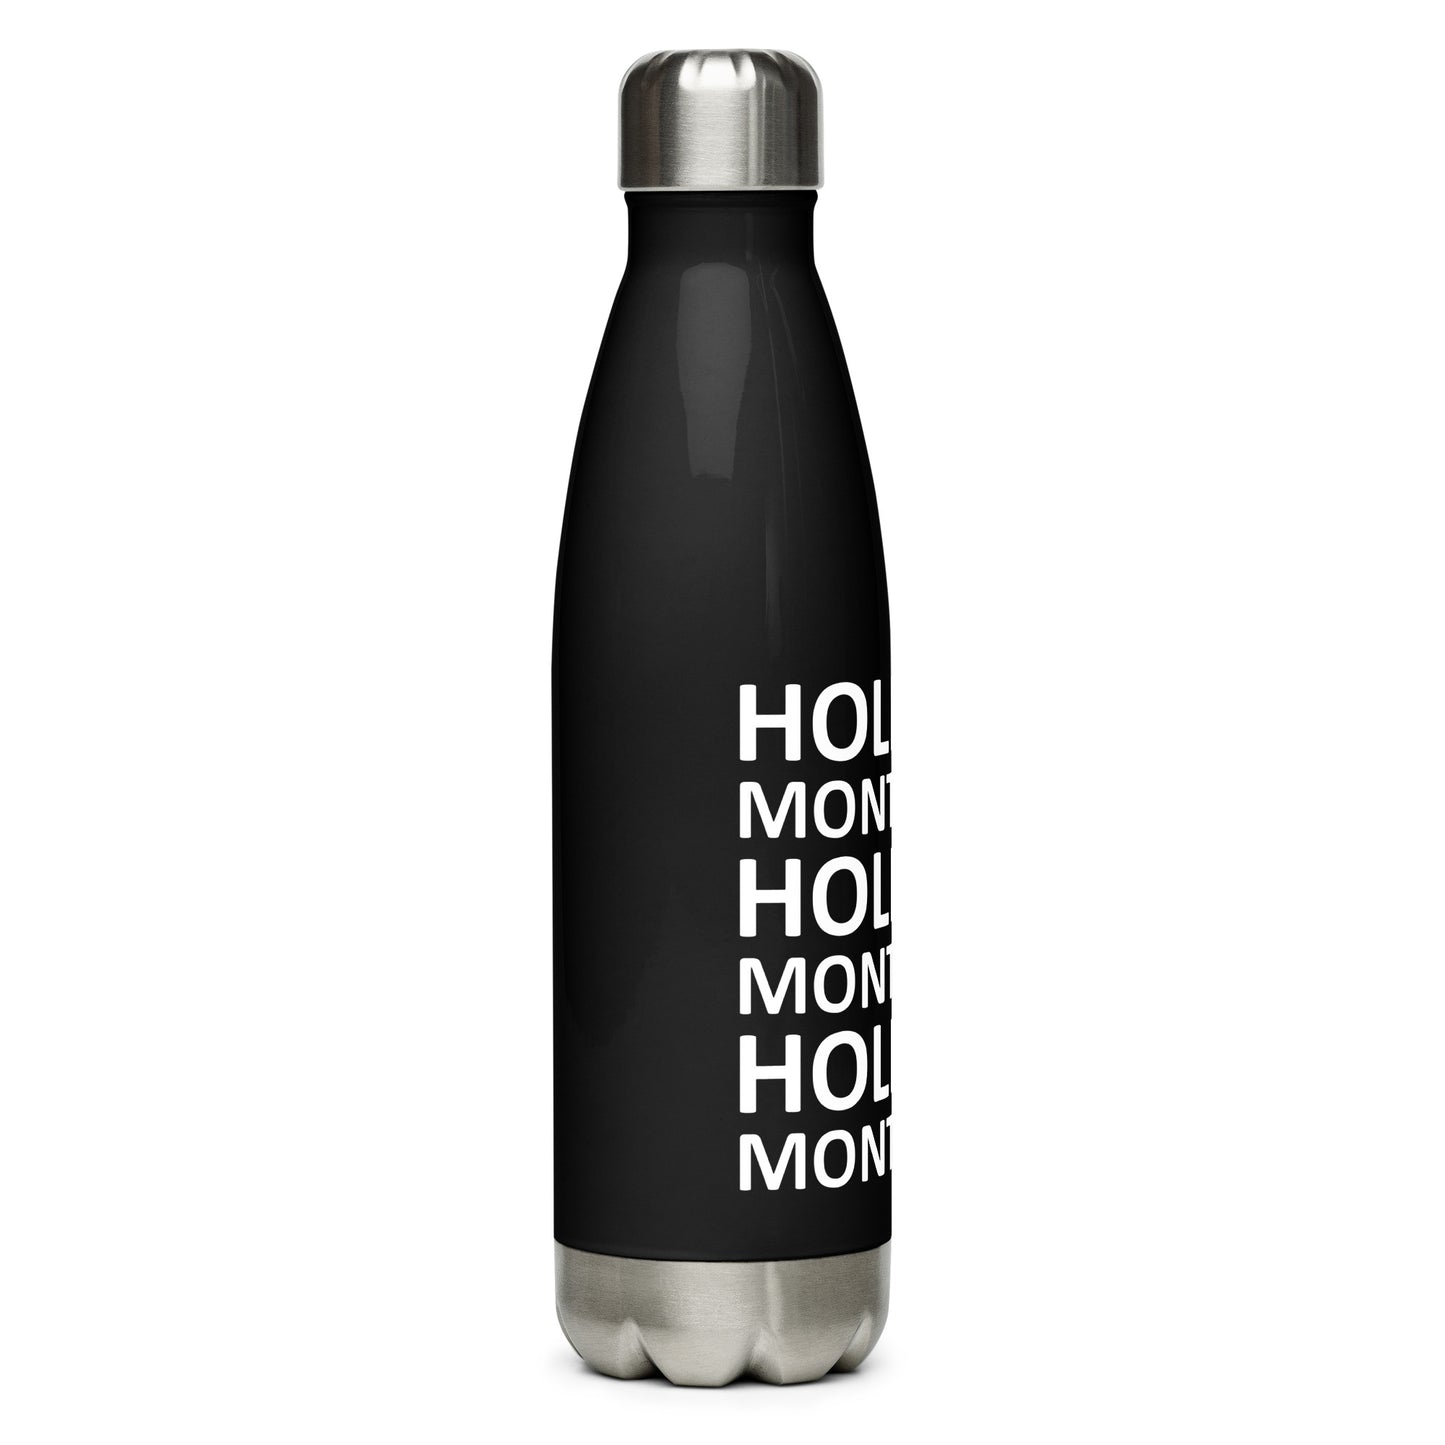 Holliday Montessori Stainless Steel Water Bottle